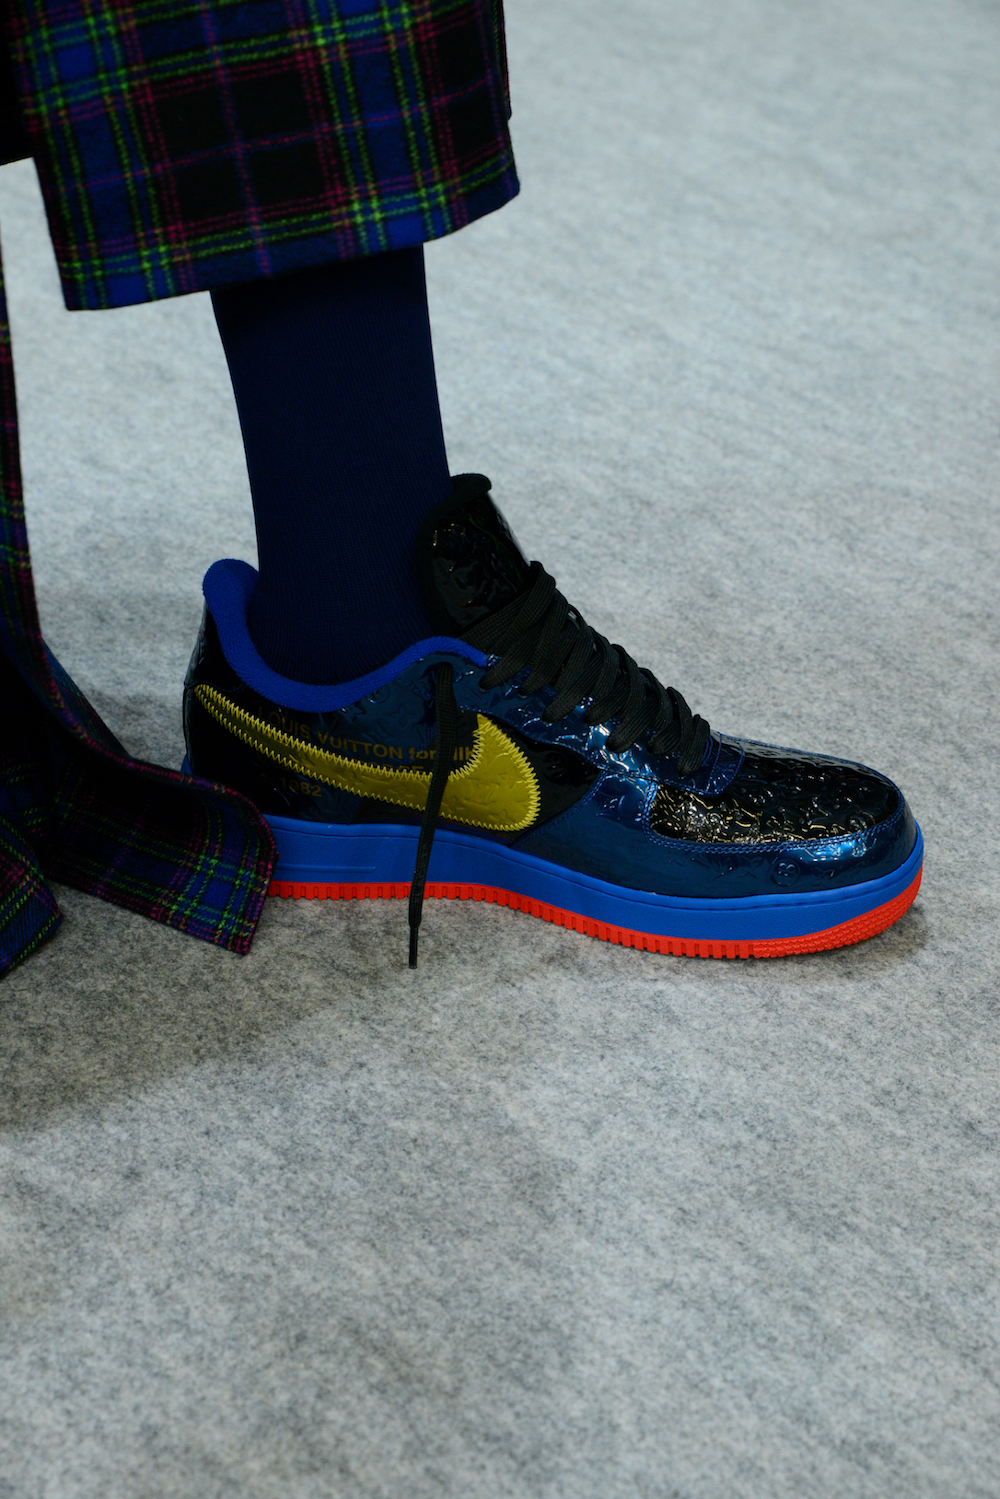 Virgil Abloh ra mắt siêu phẩm Nike Air Force 1 x Louis Vuitton 2